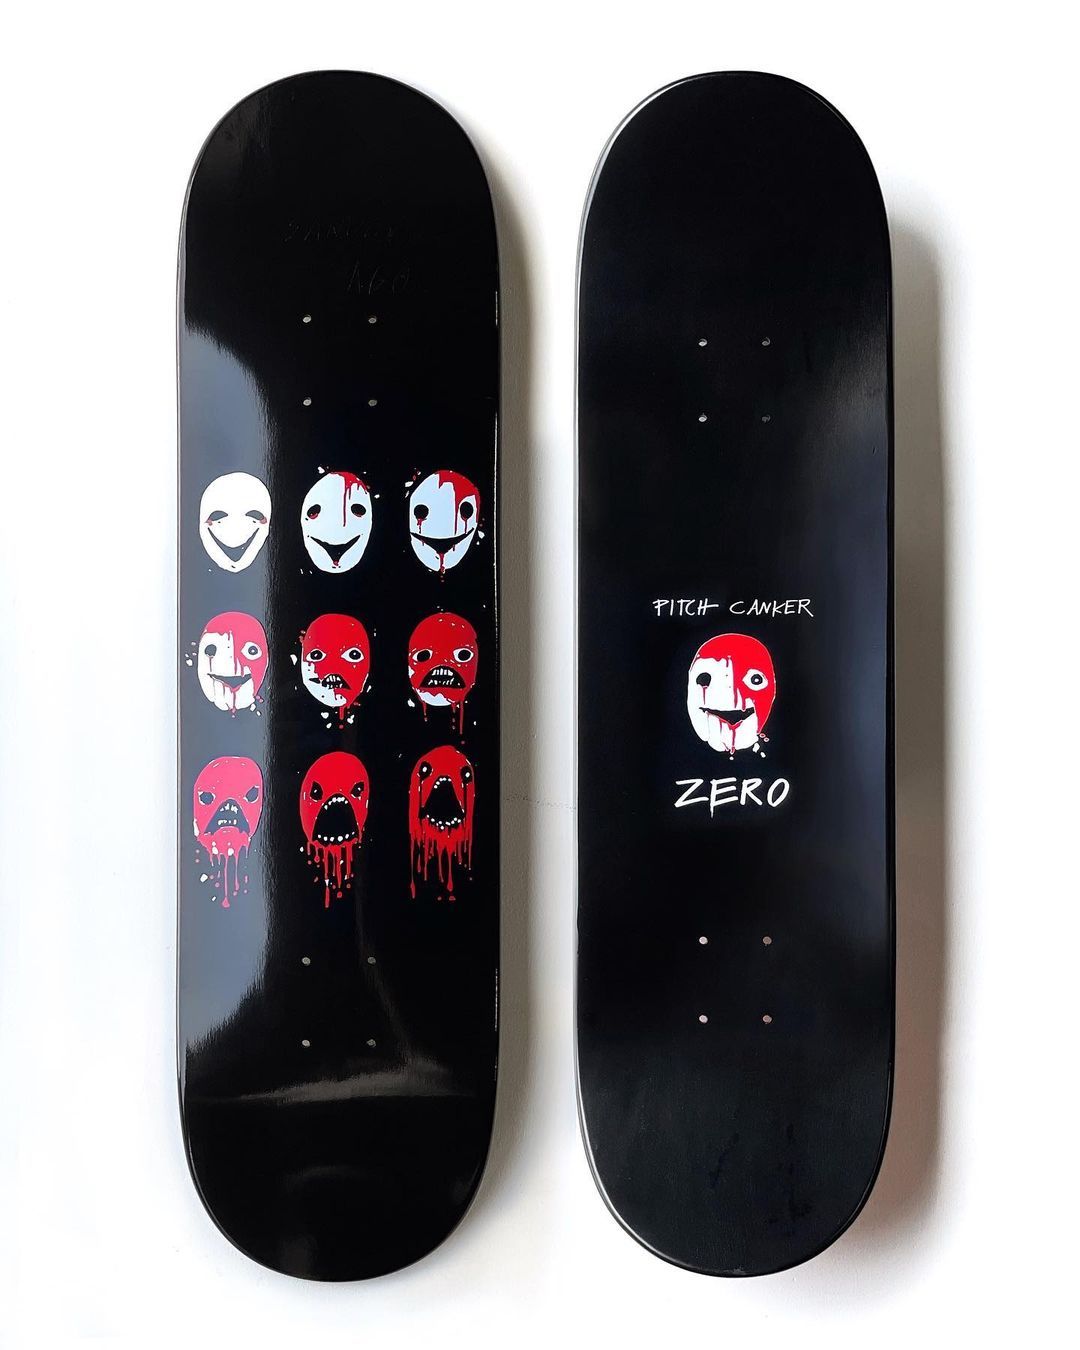 Pitch Canker X Zero Skateboards 10